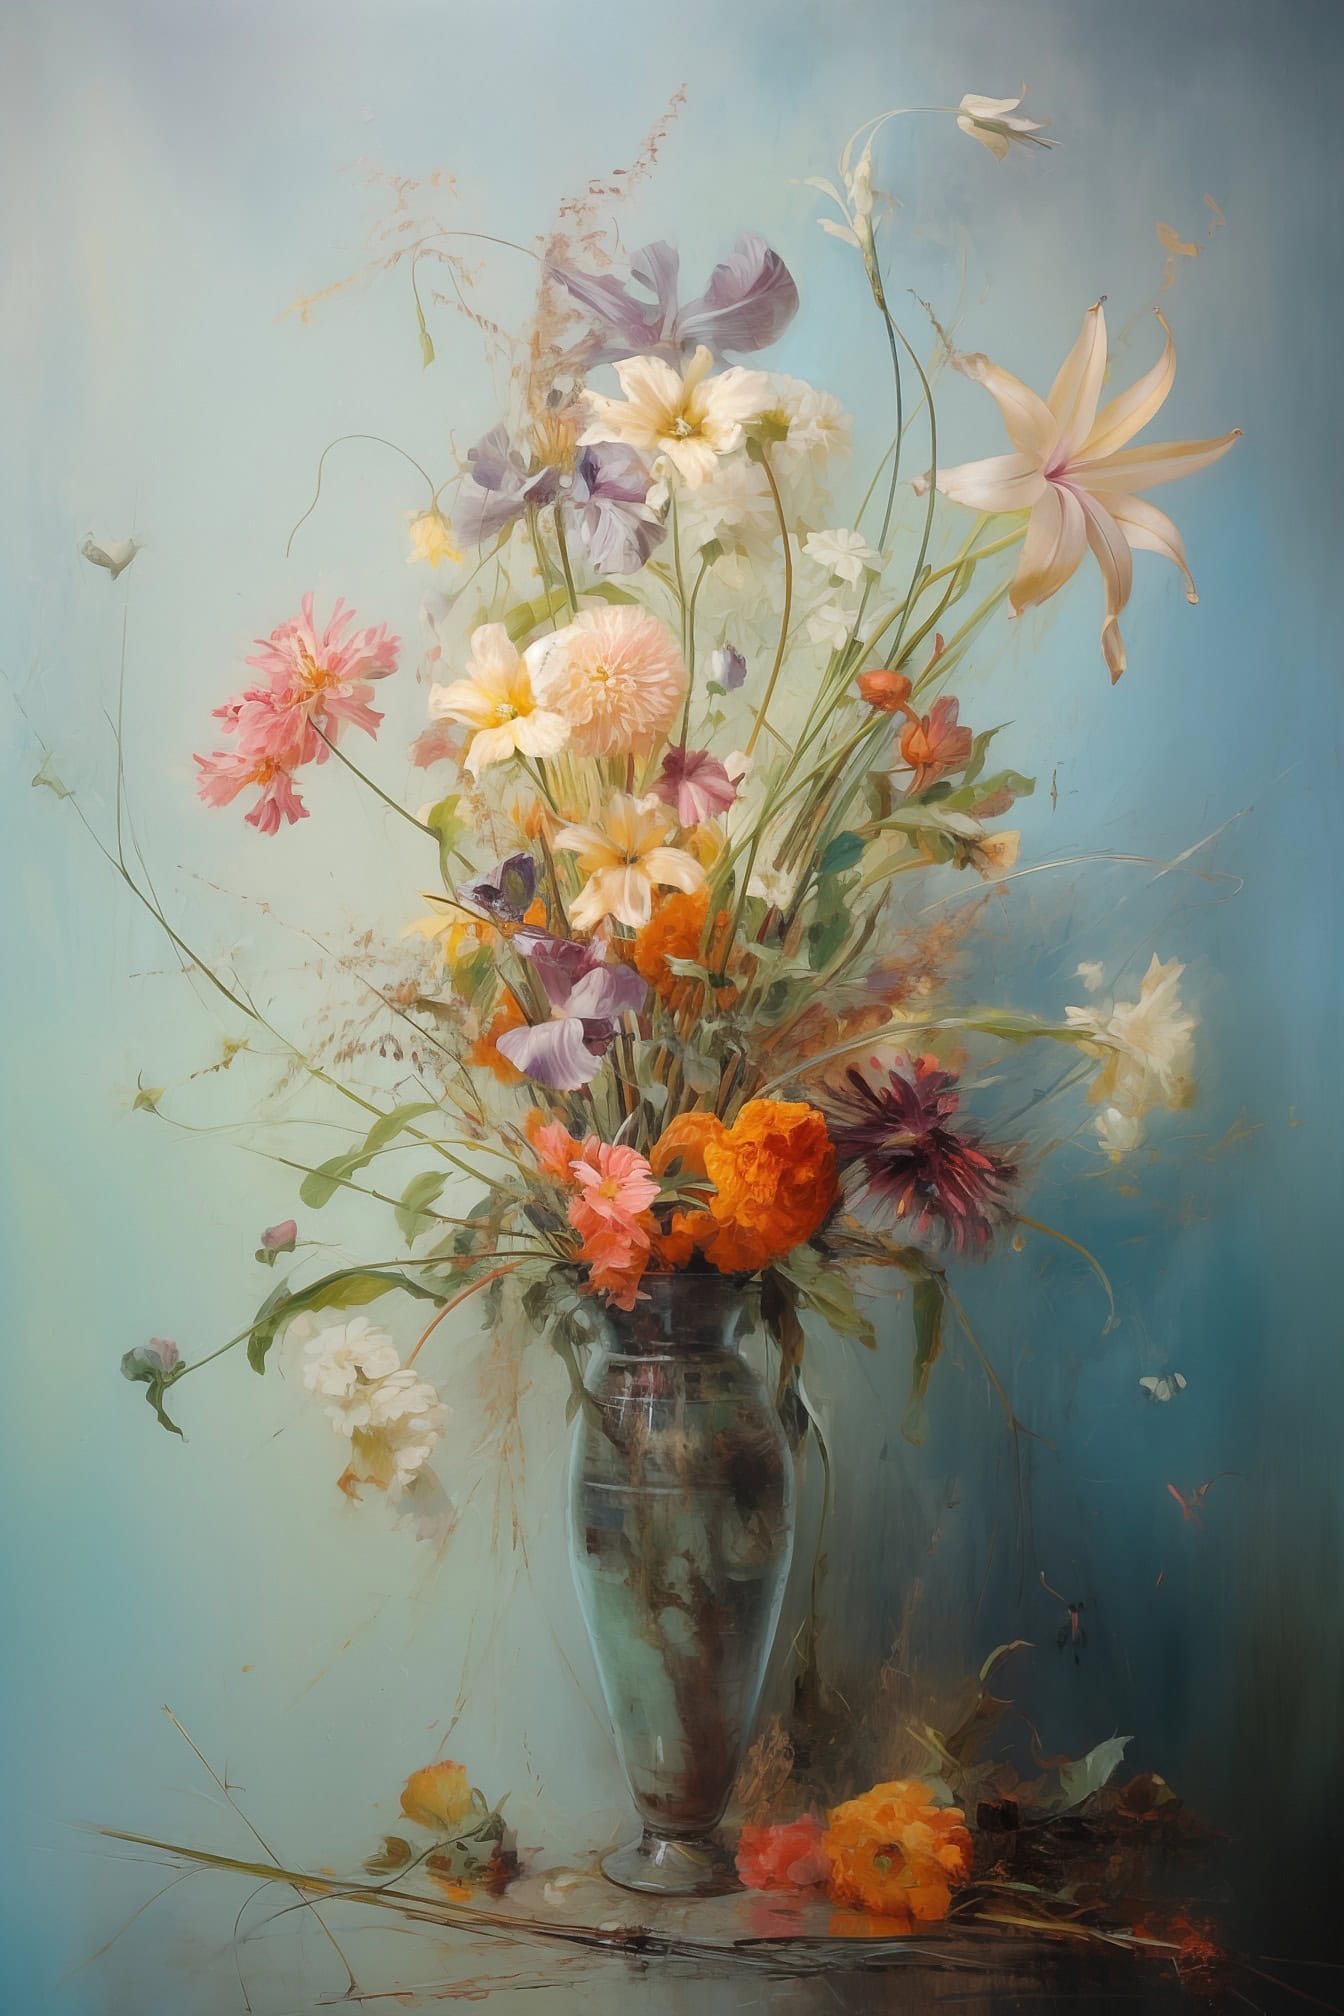 Lukisan cat minyak vas dengan bunga-bunga warna-warni di dalamnya dengan latar belakang biru muda